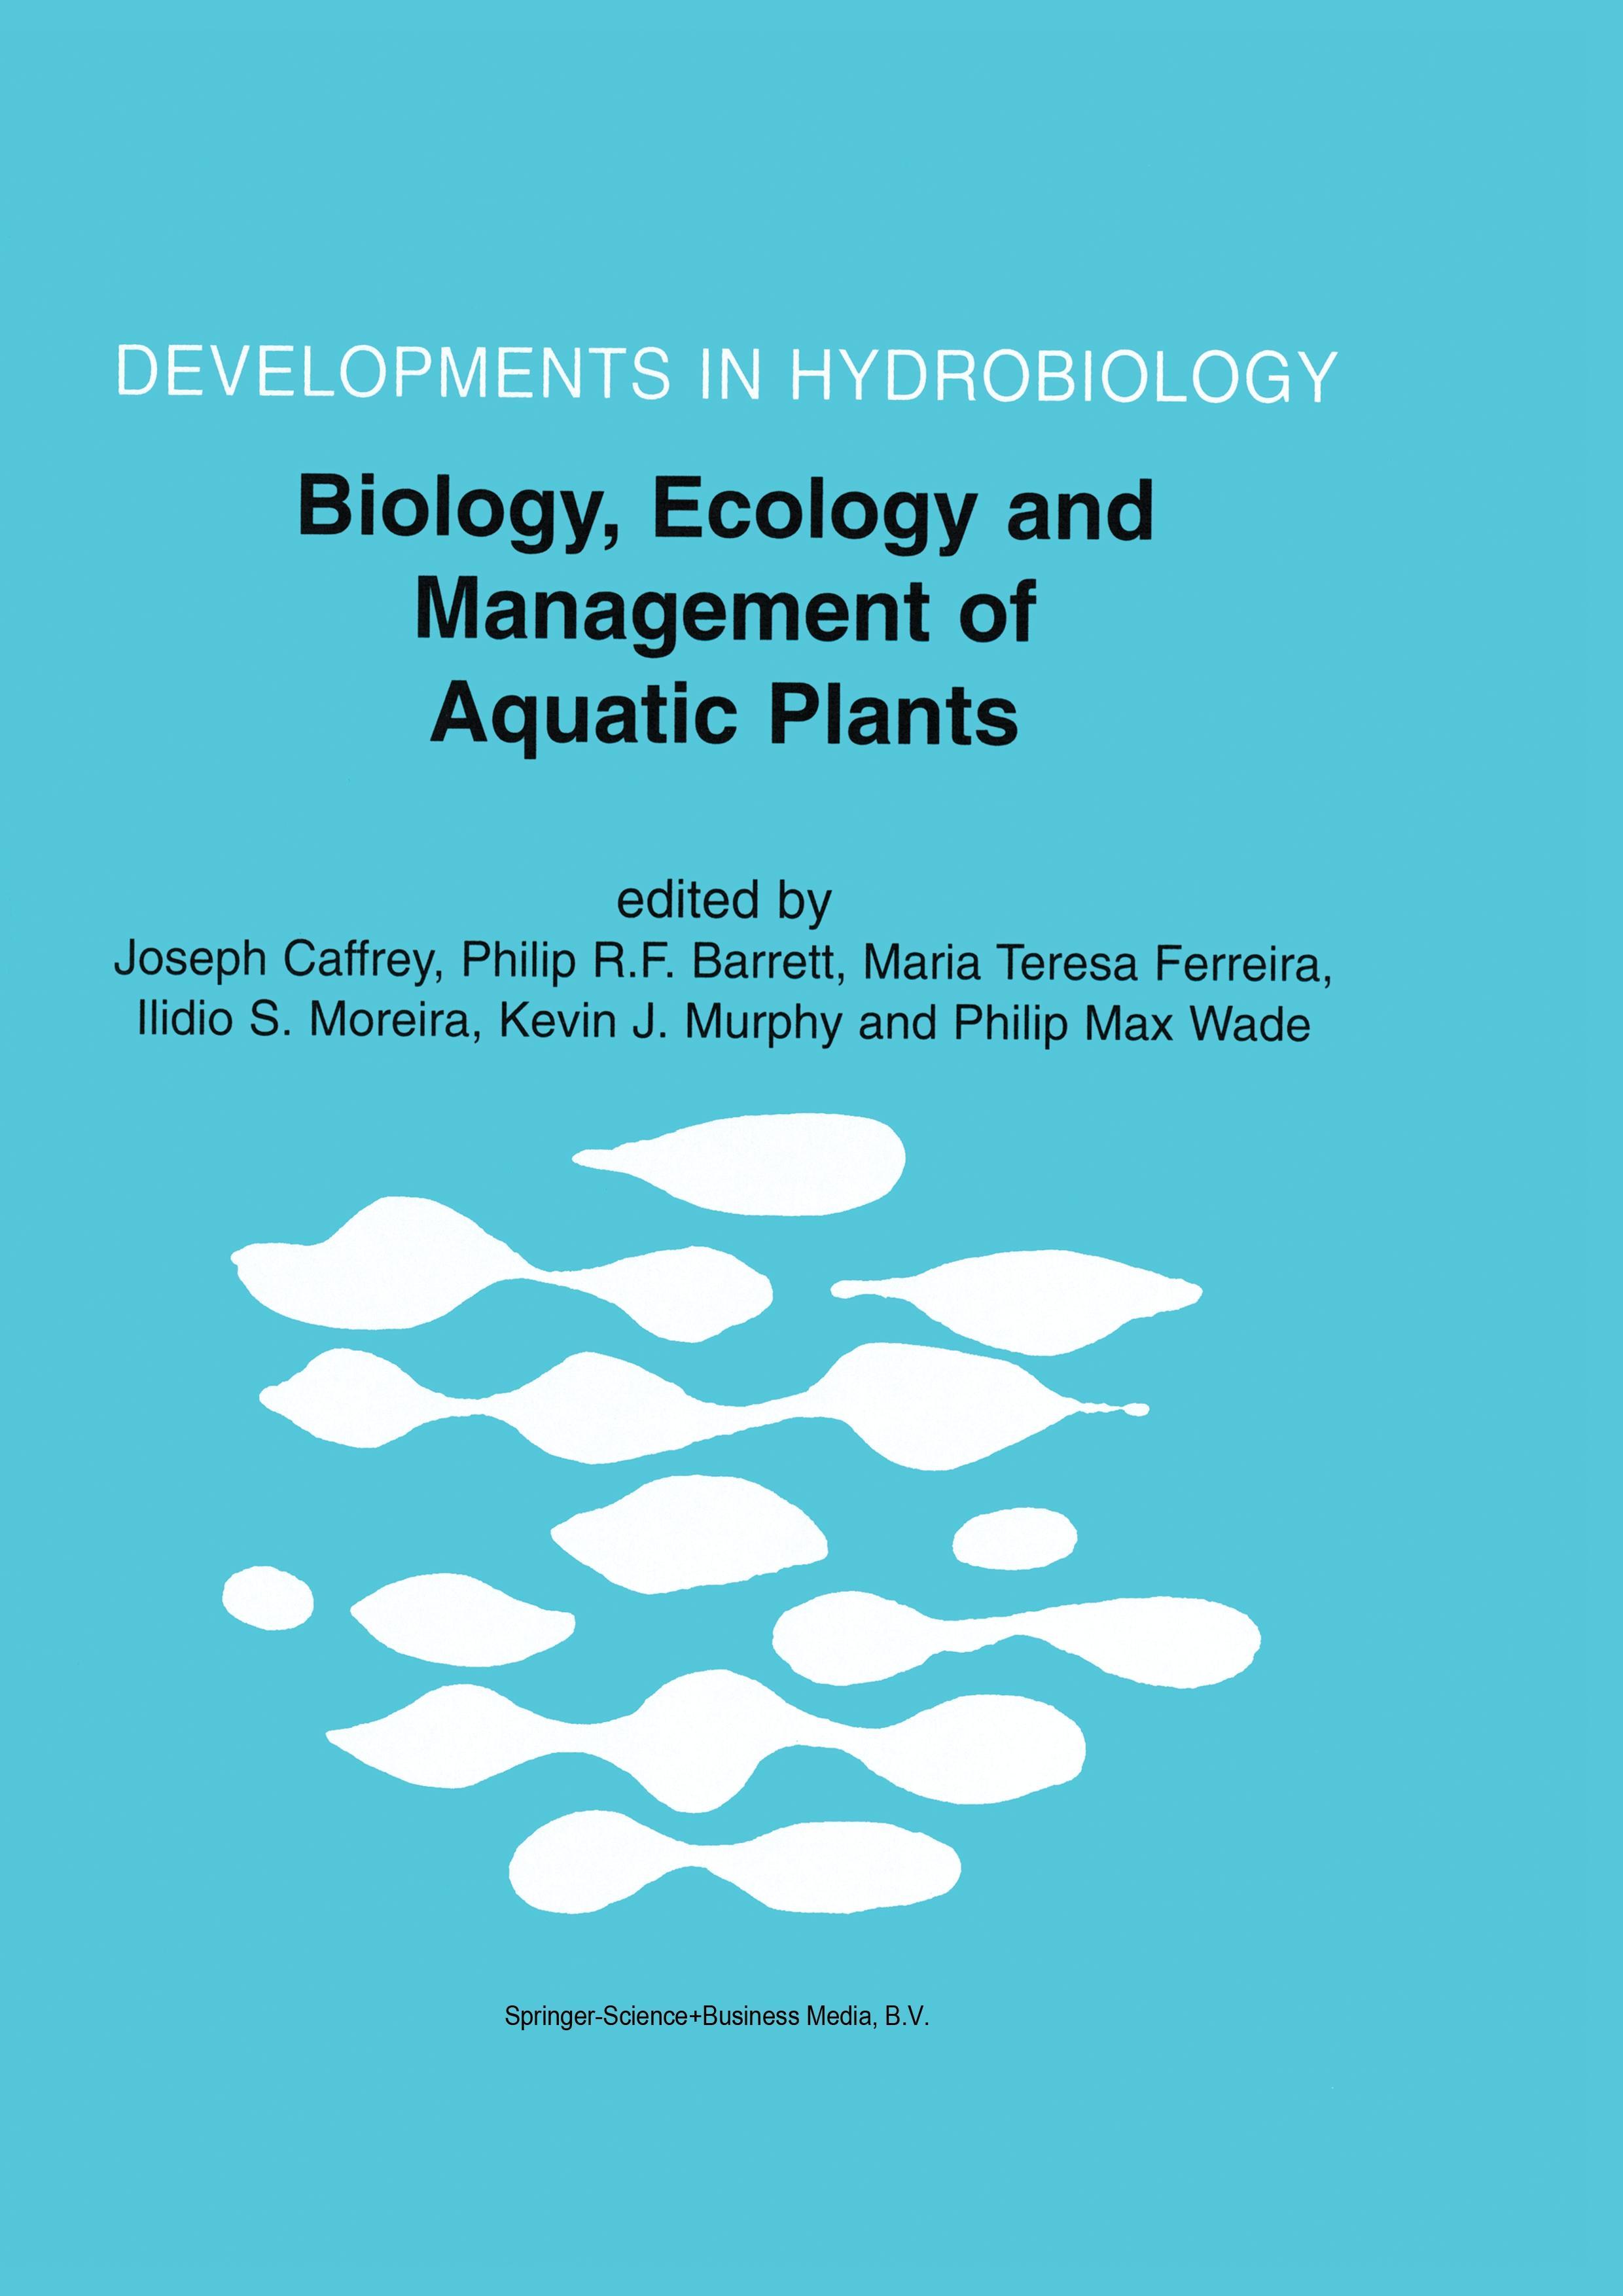 Biology, Ecology and Management of Aquatic Plants - Caffrey, Joseph|Barrett, Philip R.F.|Ferreira, Maria Teresa|Moreira, Ilidio S.|Murphy, Kevin J.|Wade, Philip Max